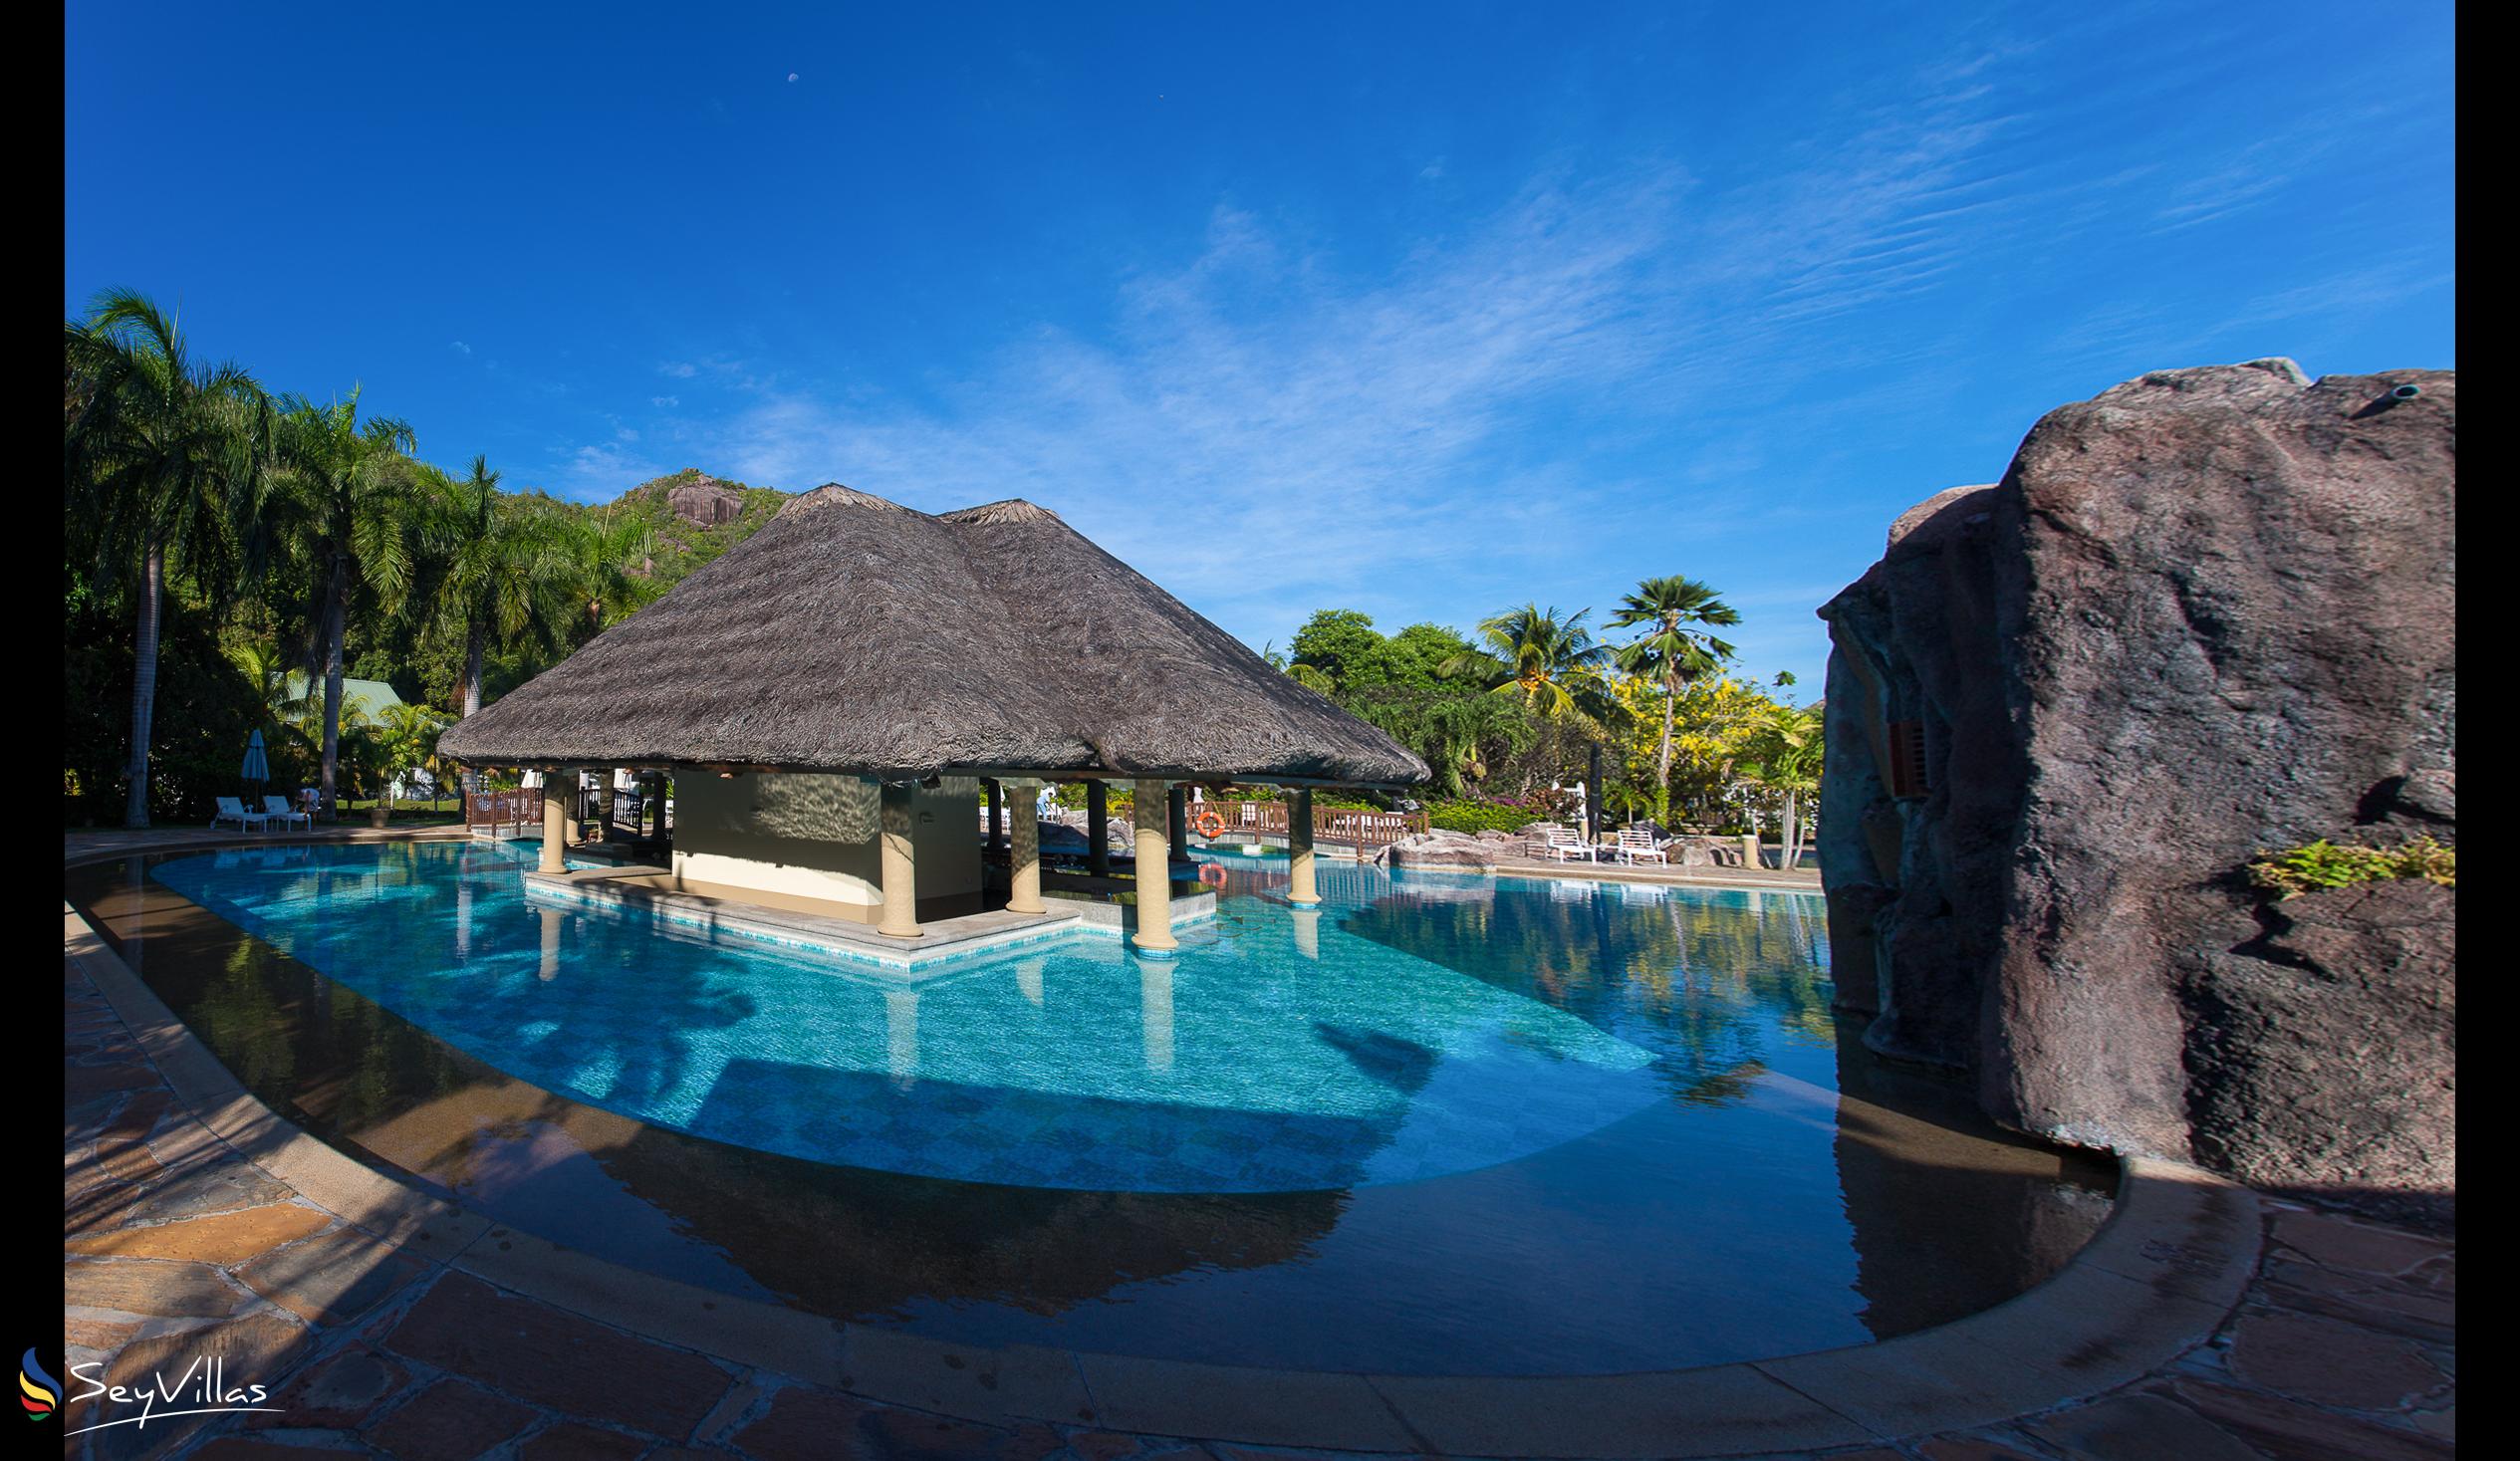 Photo 30: Le Domaine de La Reserve - Outdoor area - Praslin (Seychelles)